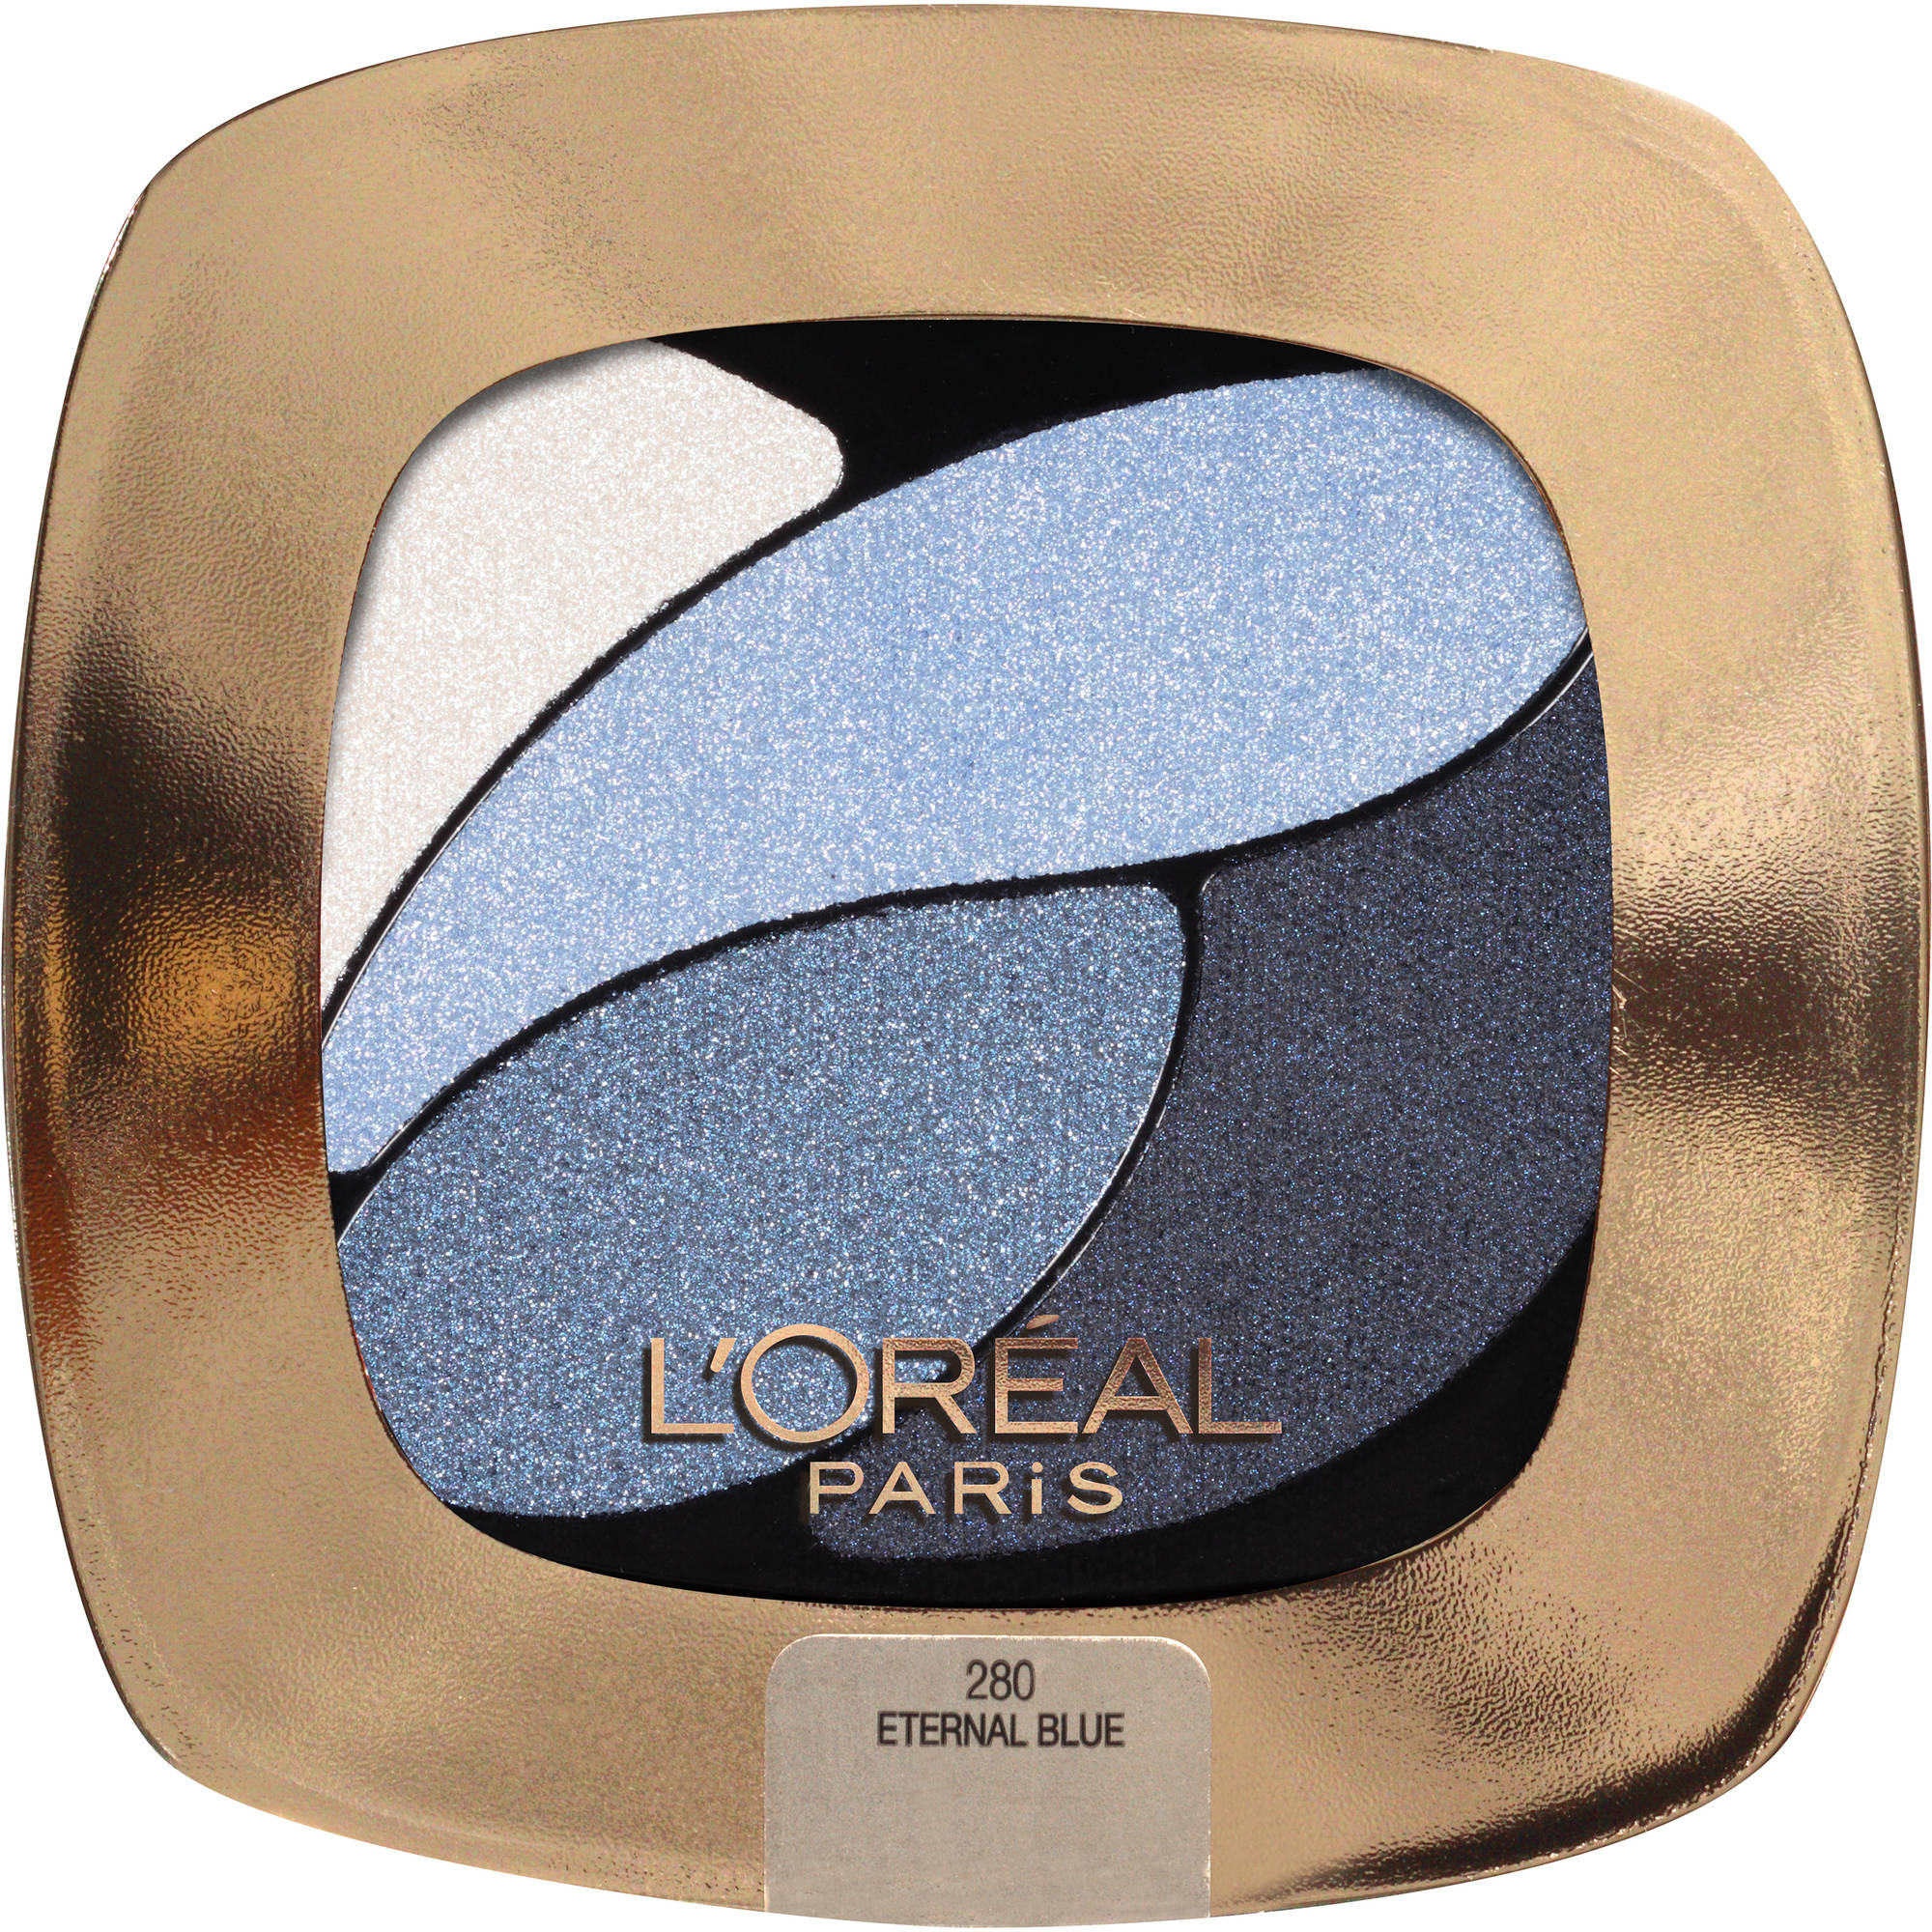 L'Oreal Paris Colour Riche Dual Effects Eye Shadow, Eternal Blue - image 2 of 2